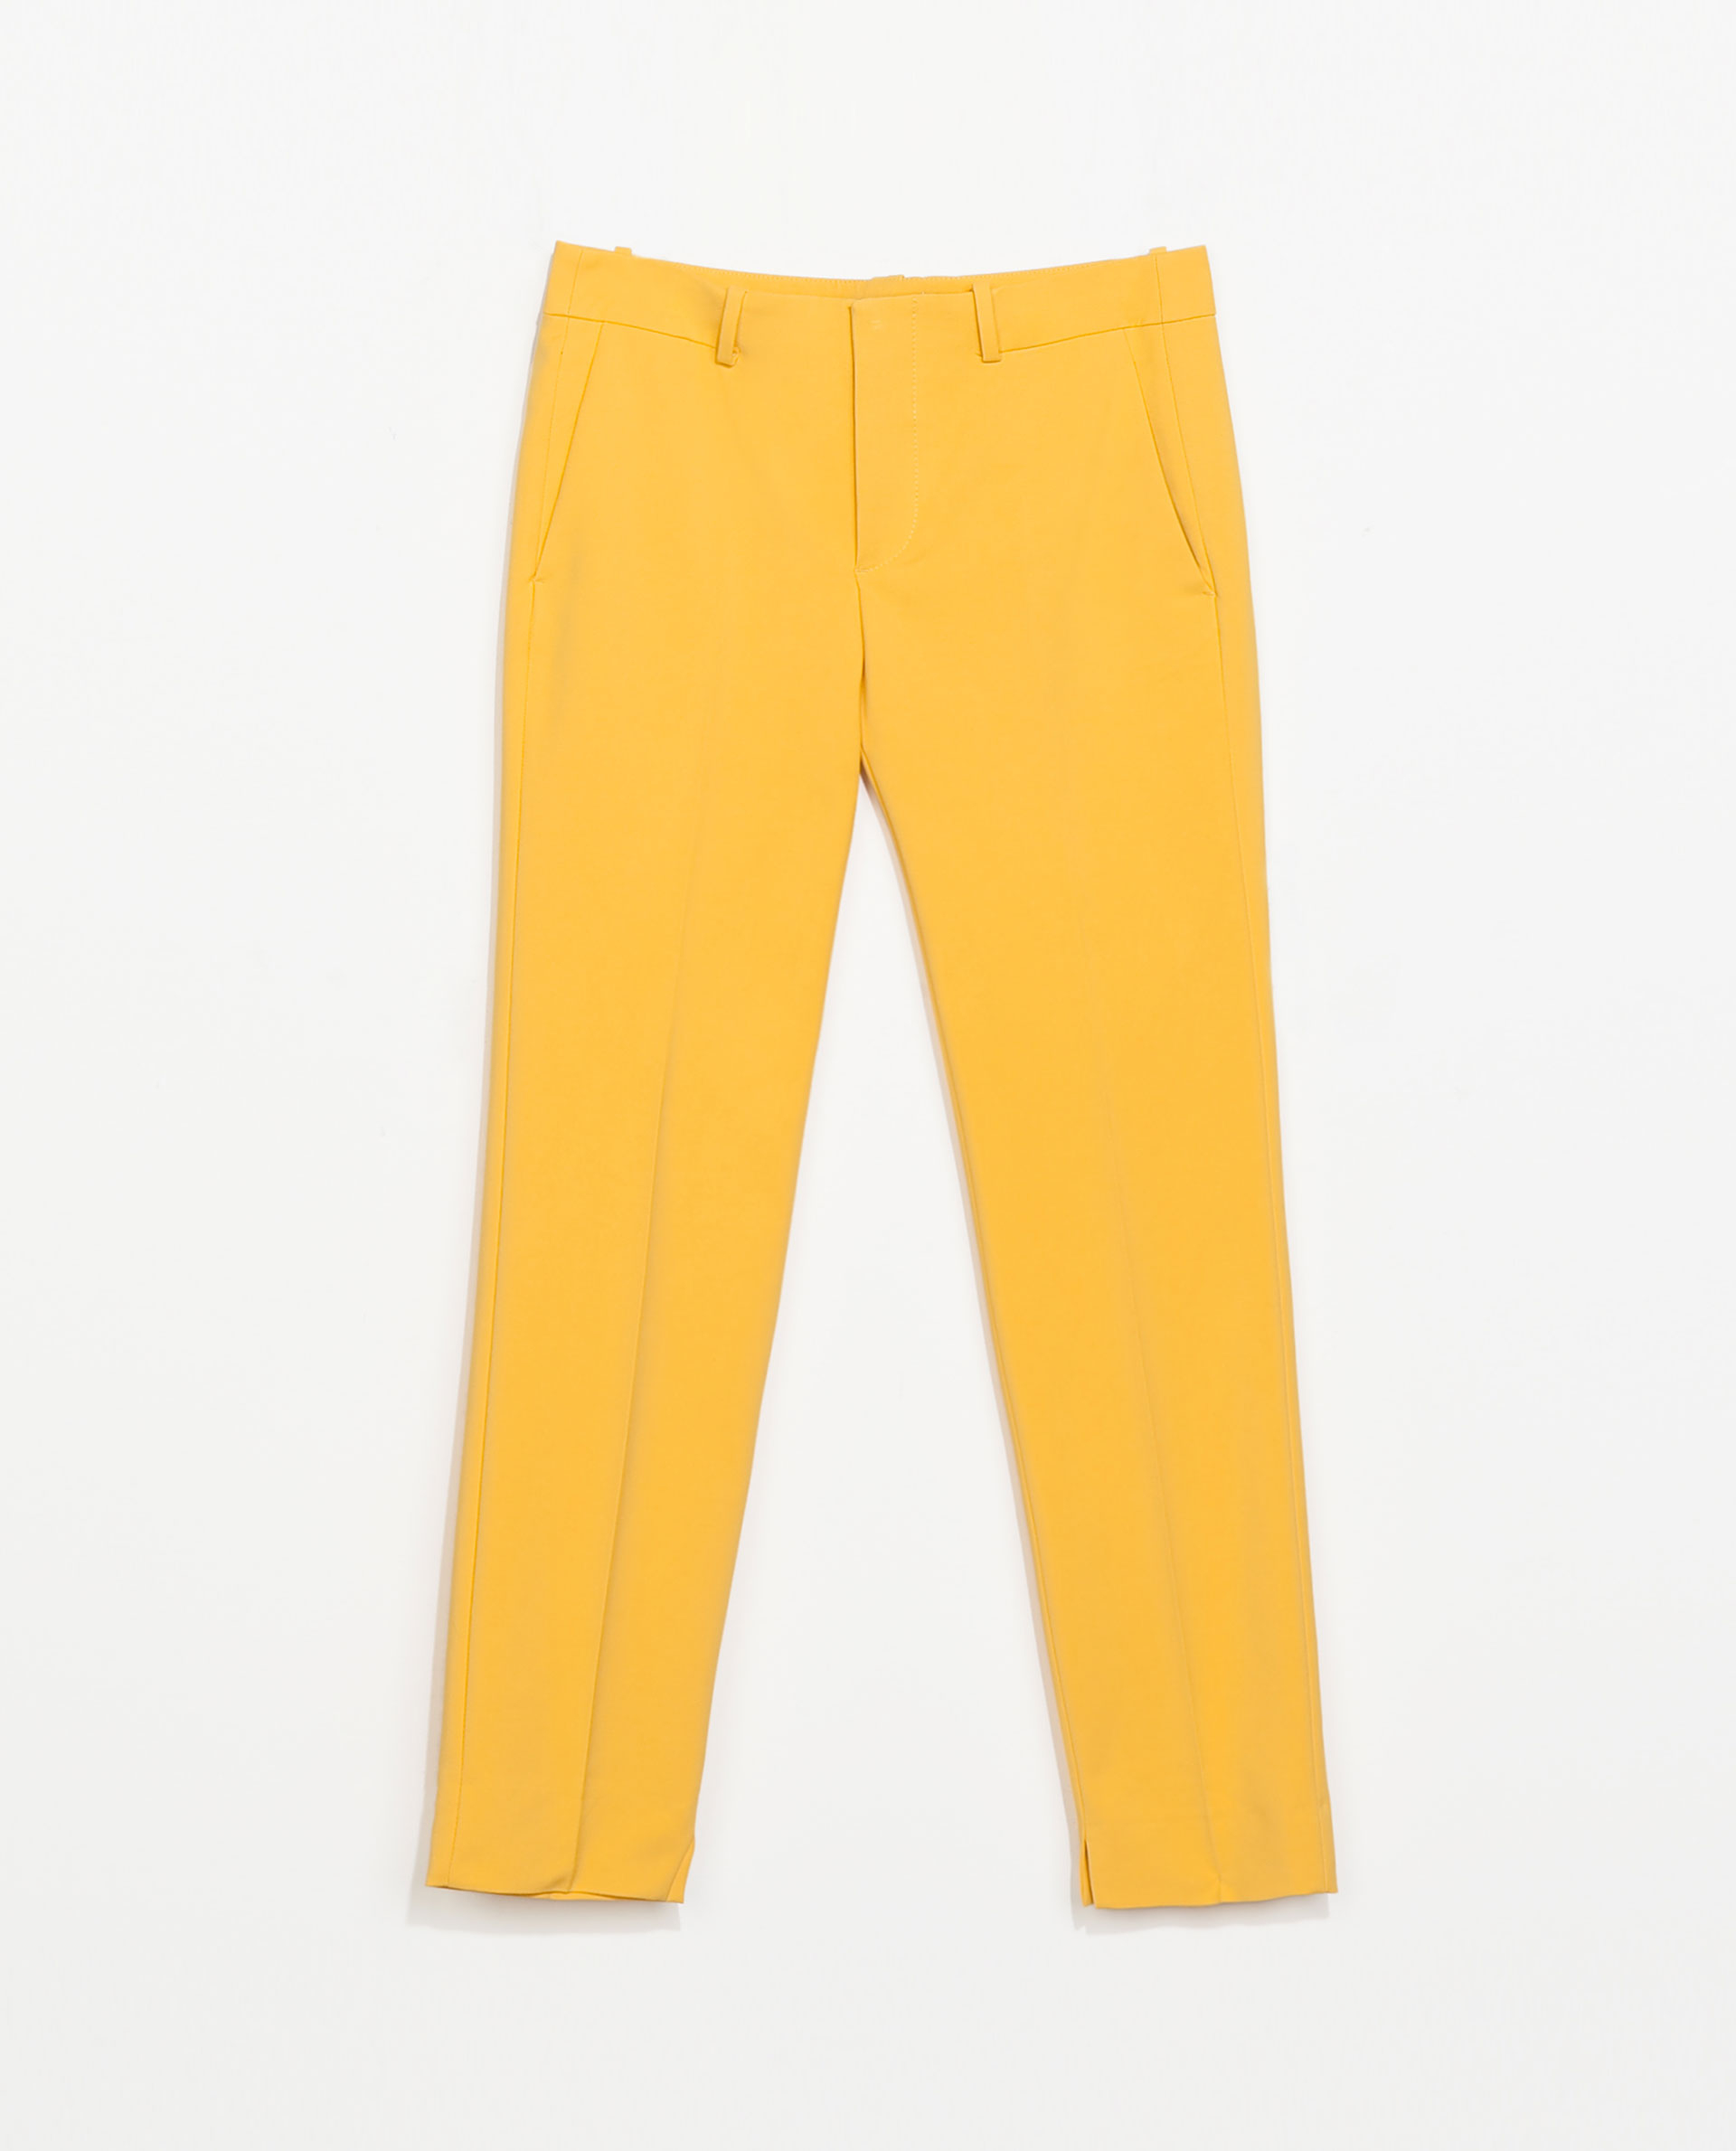 Zara Cotton Trousers in Yellow (Light yellow) | Lyst